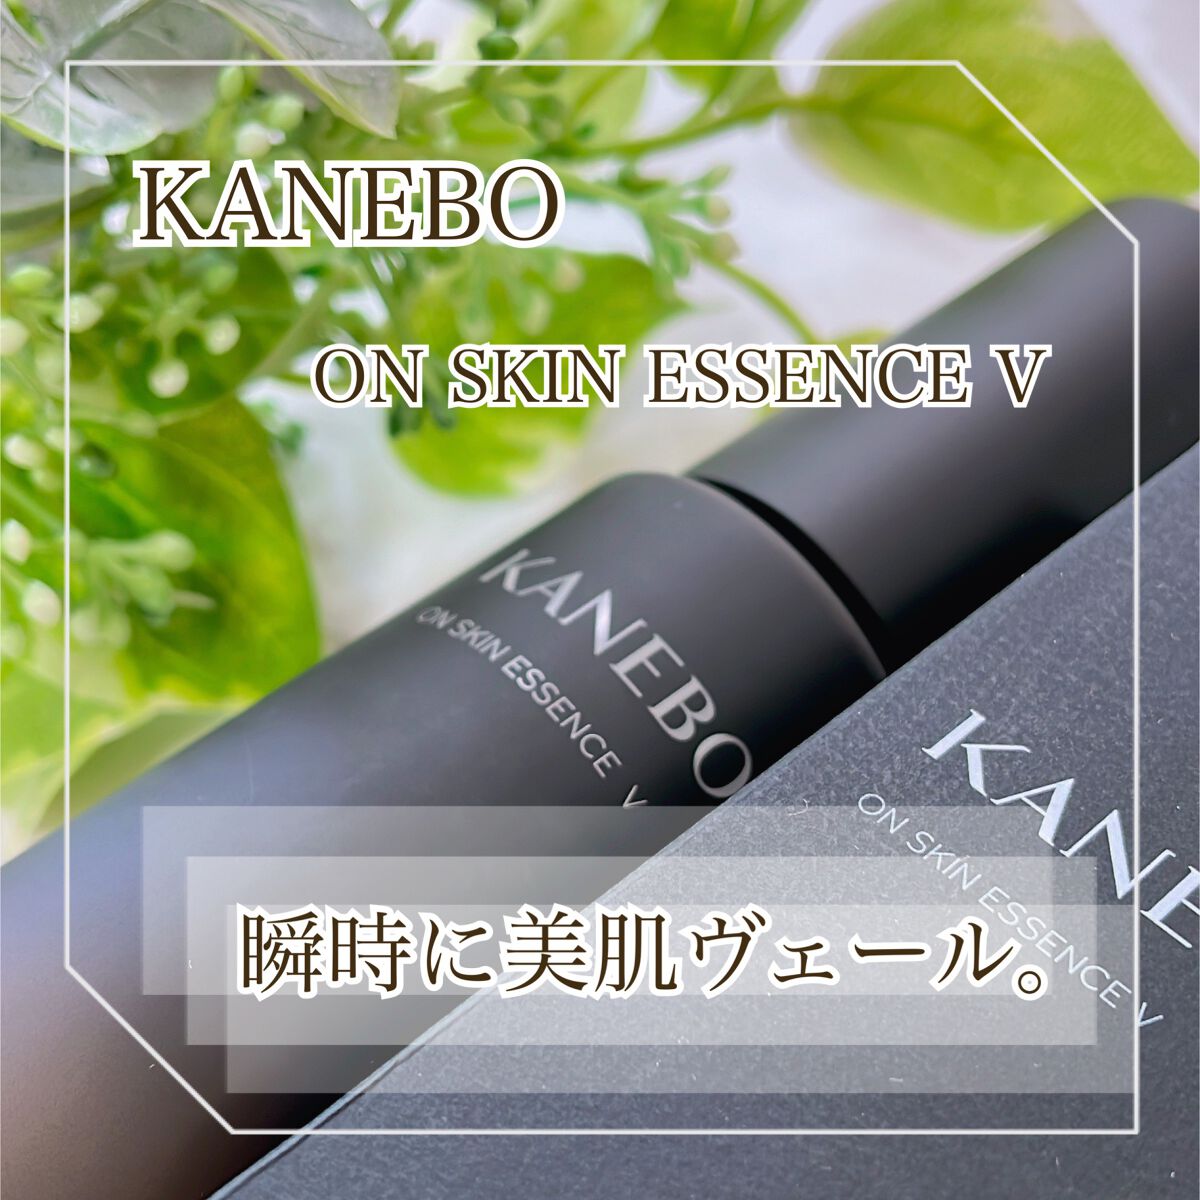 KANEBO(カネボウ) カネボウ オン スキン エッセンス V 化粧水 100ミリリットル (x 1) - 2